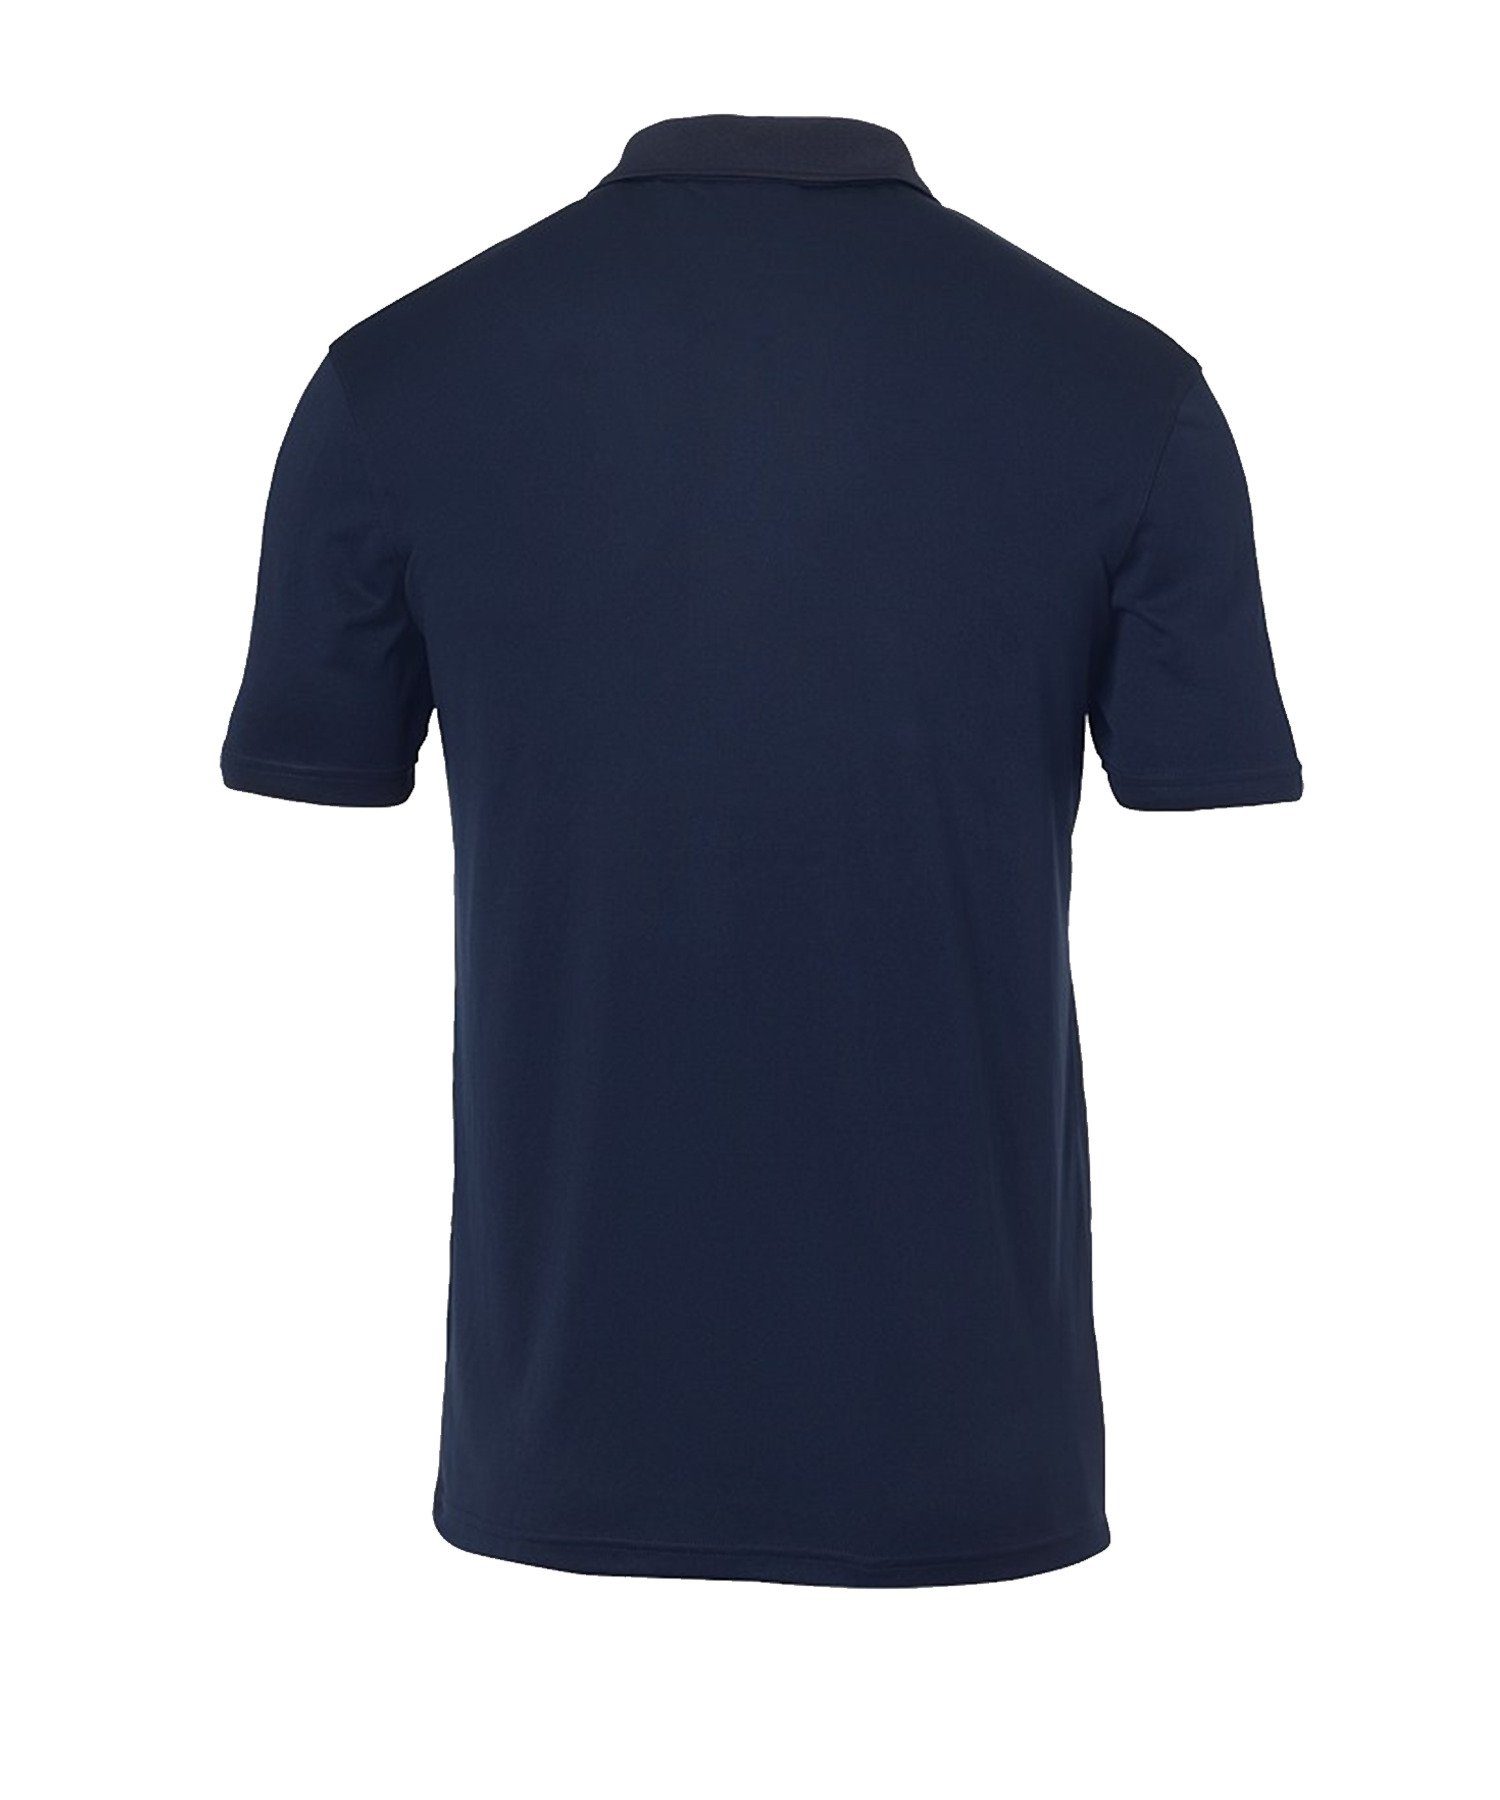 Poloshirt Stream default Blau 22 uhlsport T-Shirt